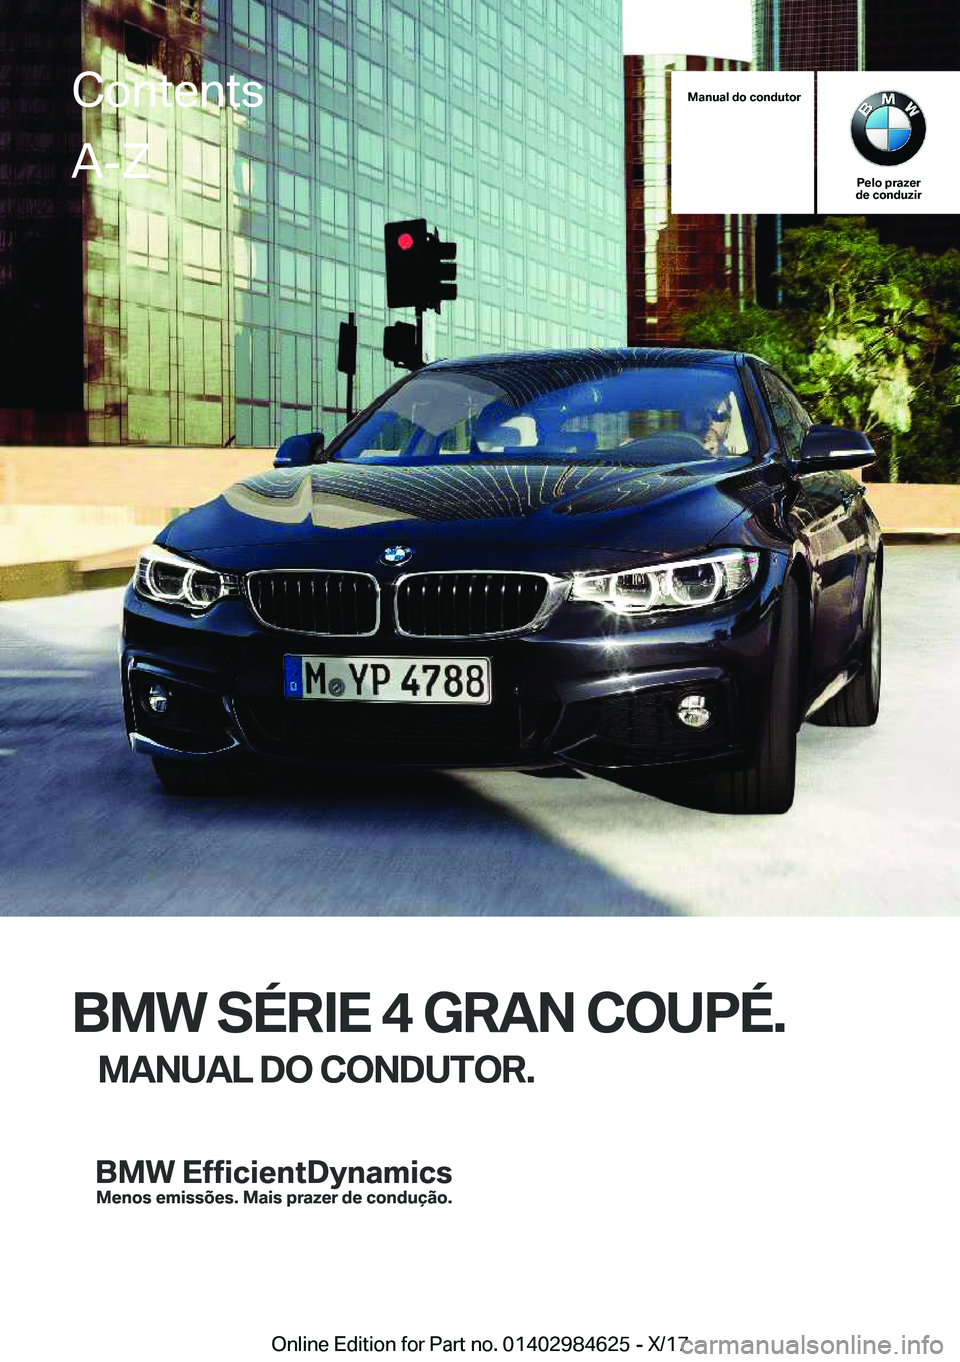 BMW 4 SERIES GRAN COUPE 2017  ΟΔΗΓΌΣ ΧΡΉΣΗΣ (in Greek) �M�a�n�u�a�l��d�o��c�o�n�d�u�t�o�r
�P�e�l�o��p�r�a�z�e�r
�d�e��c�o�n�d�u�z�i�r
�B�M�W��S�